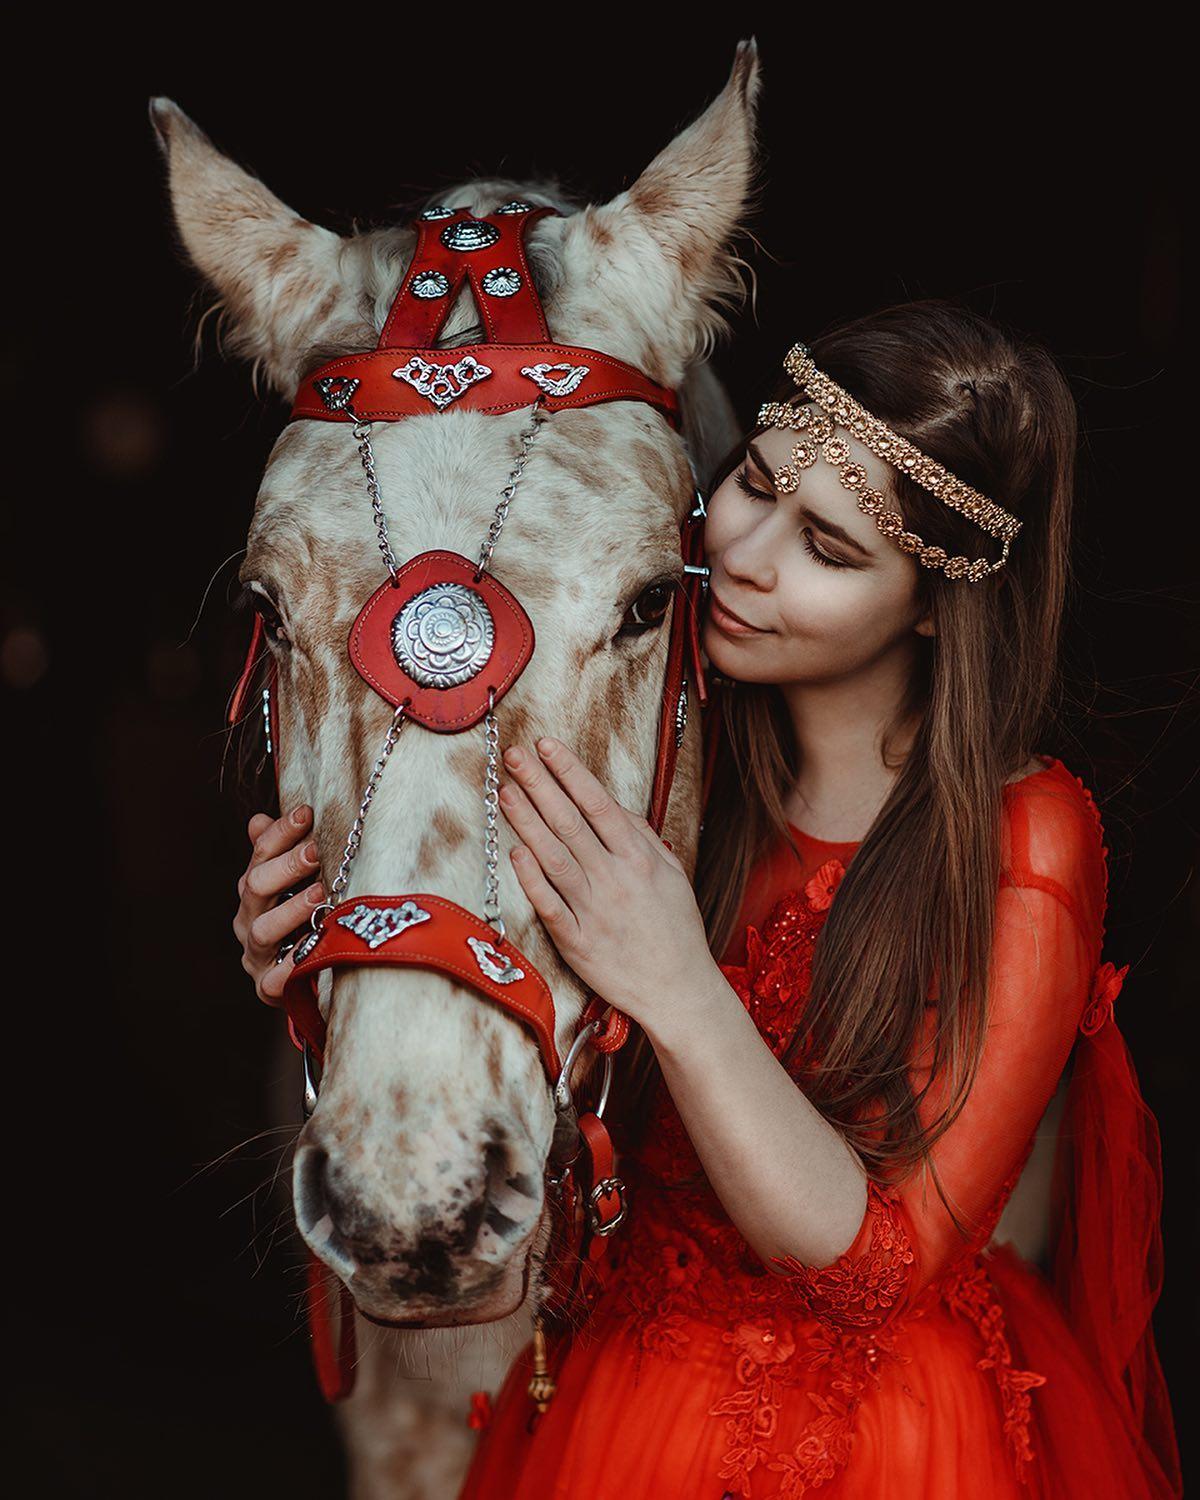 (Courtesy of <a href="https://www.instagram.com/equestriankasiabukowska/">Kasia Bukowska</a>)